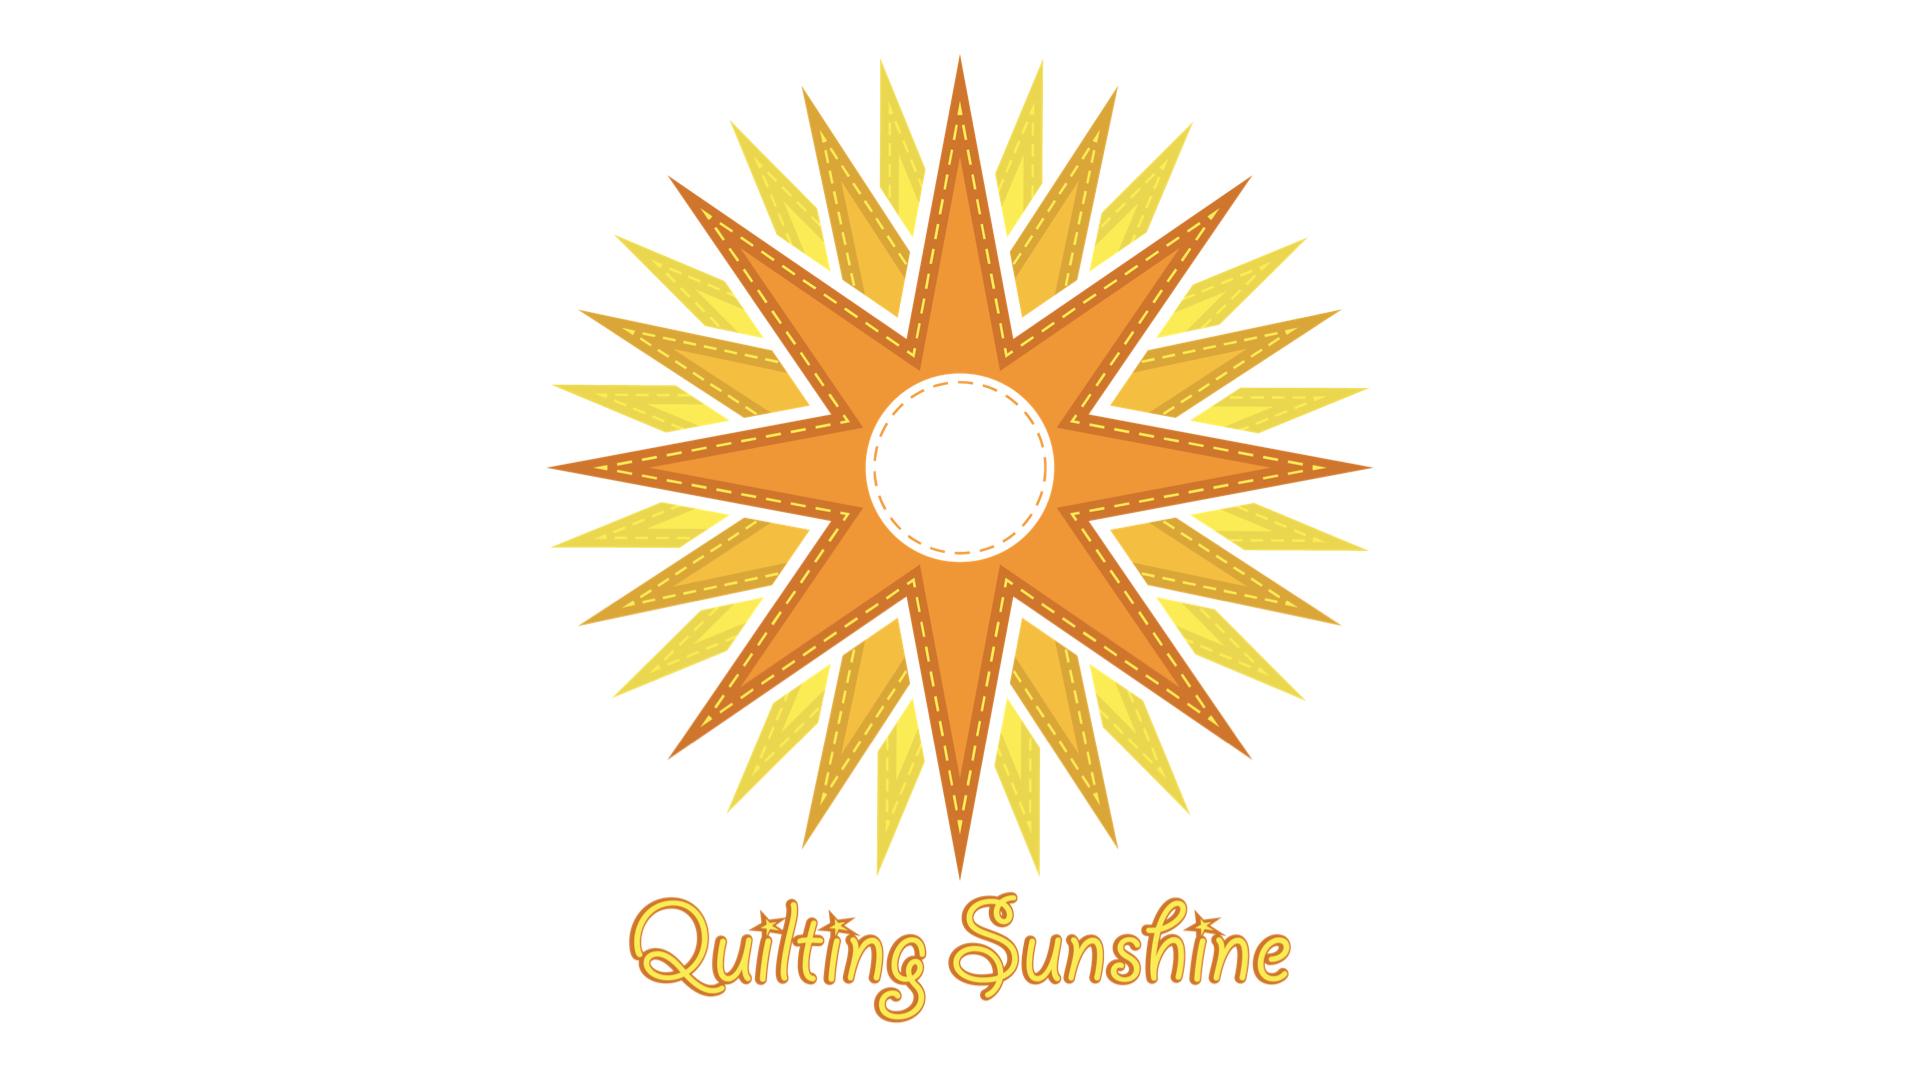 QUILTING SUNSHINE